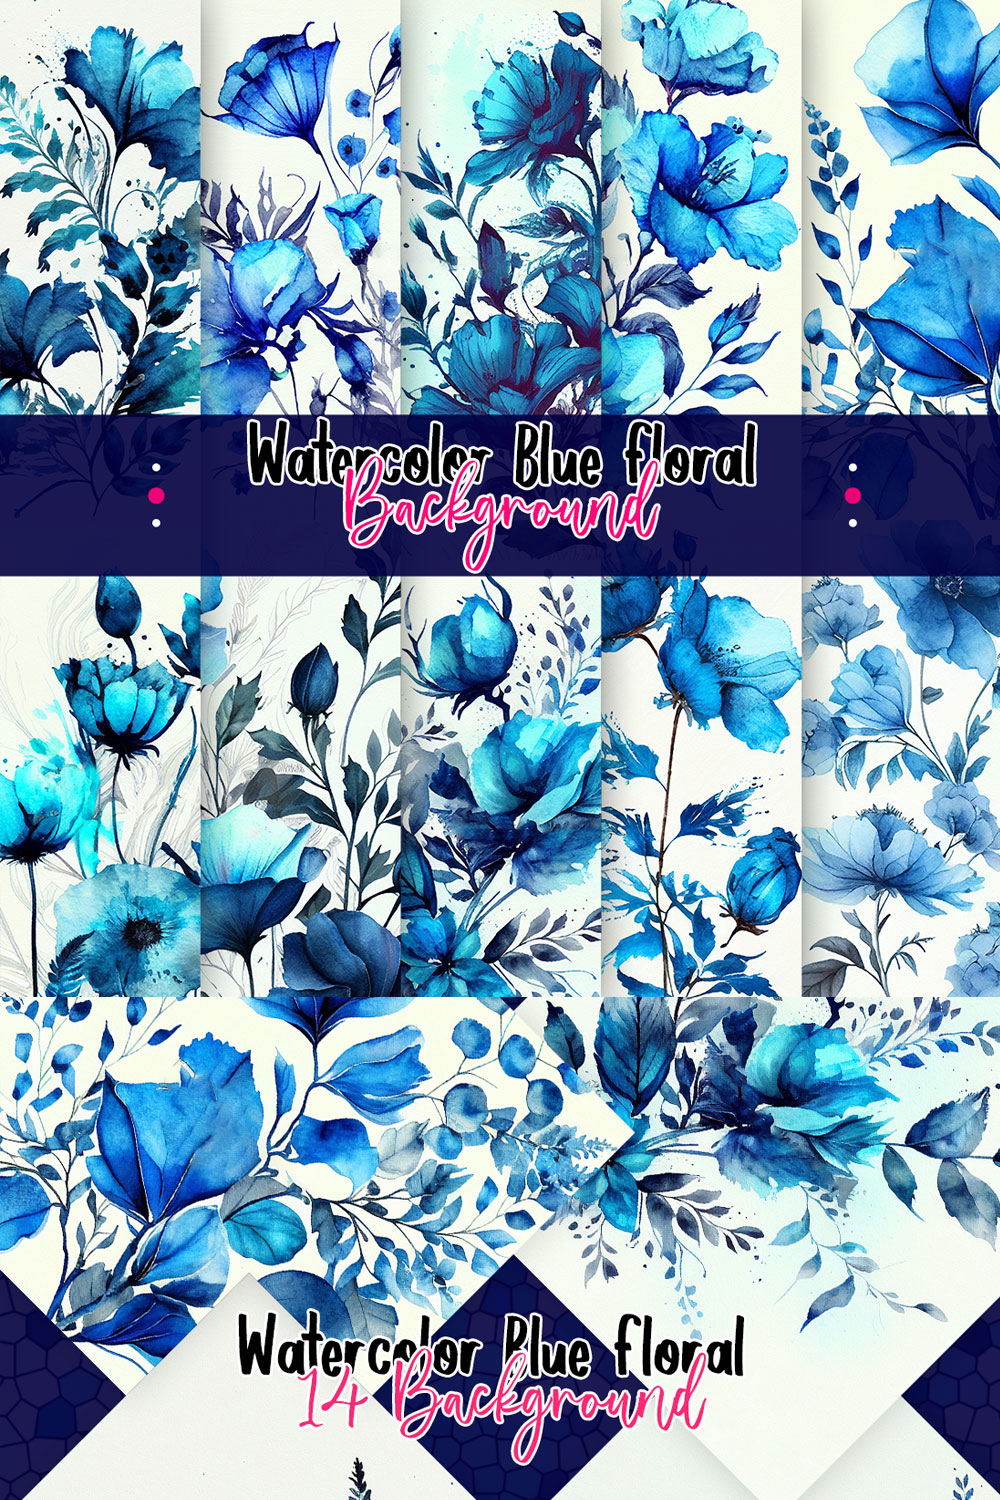 Watercolor Blue Floral Backgrounds pinterest preview image.